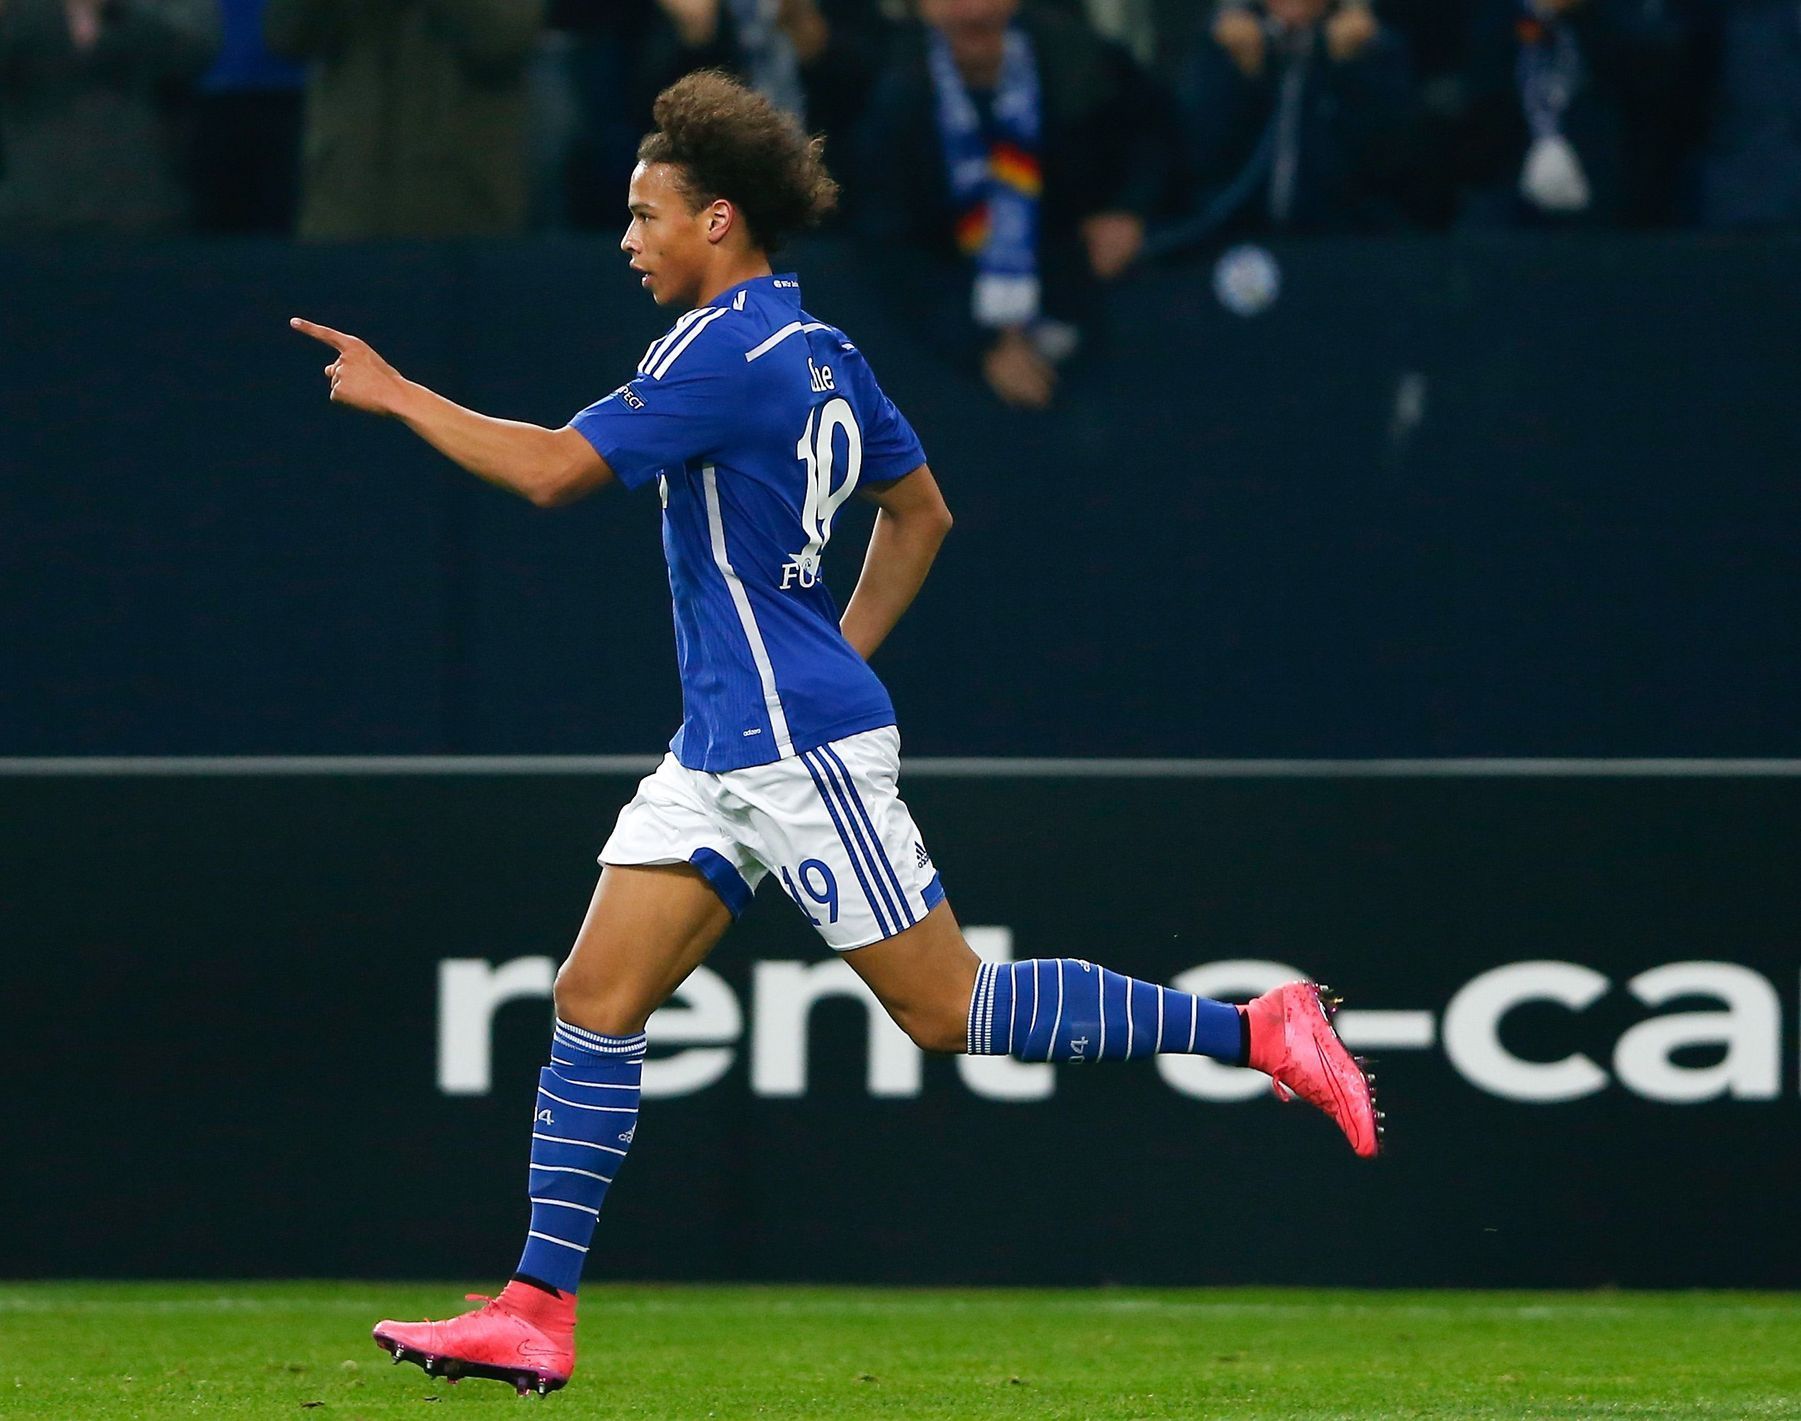 EL, Schalke 04-Sparta: Leroy Sane slaví gól na 2:2